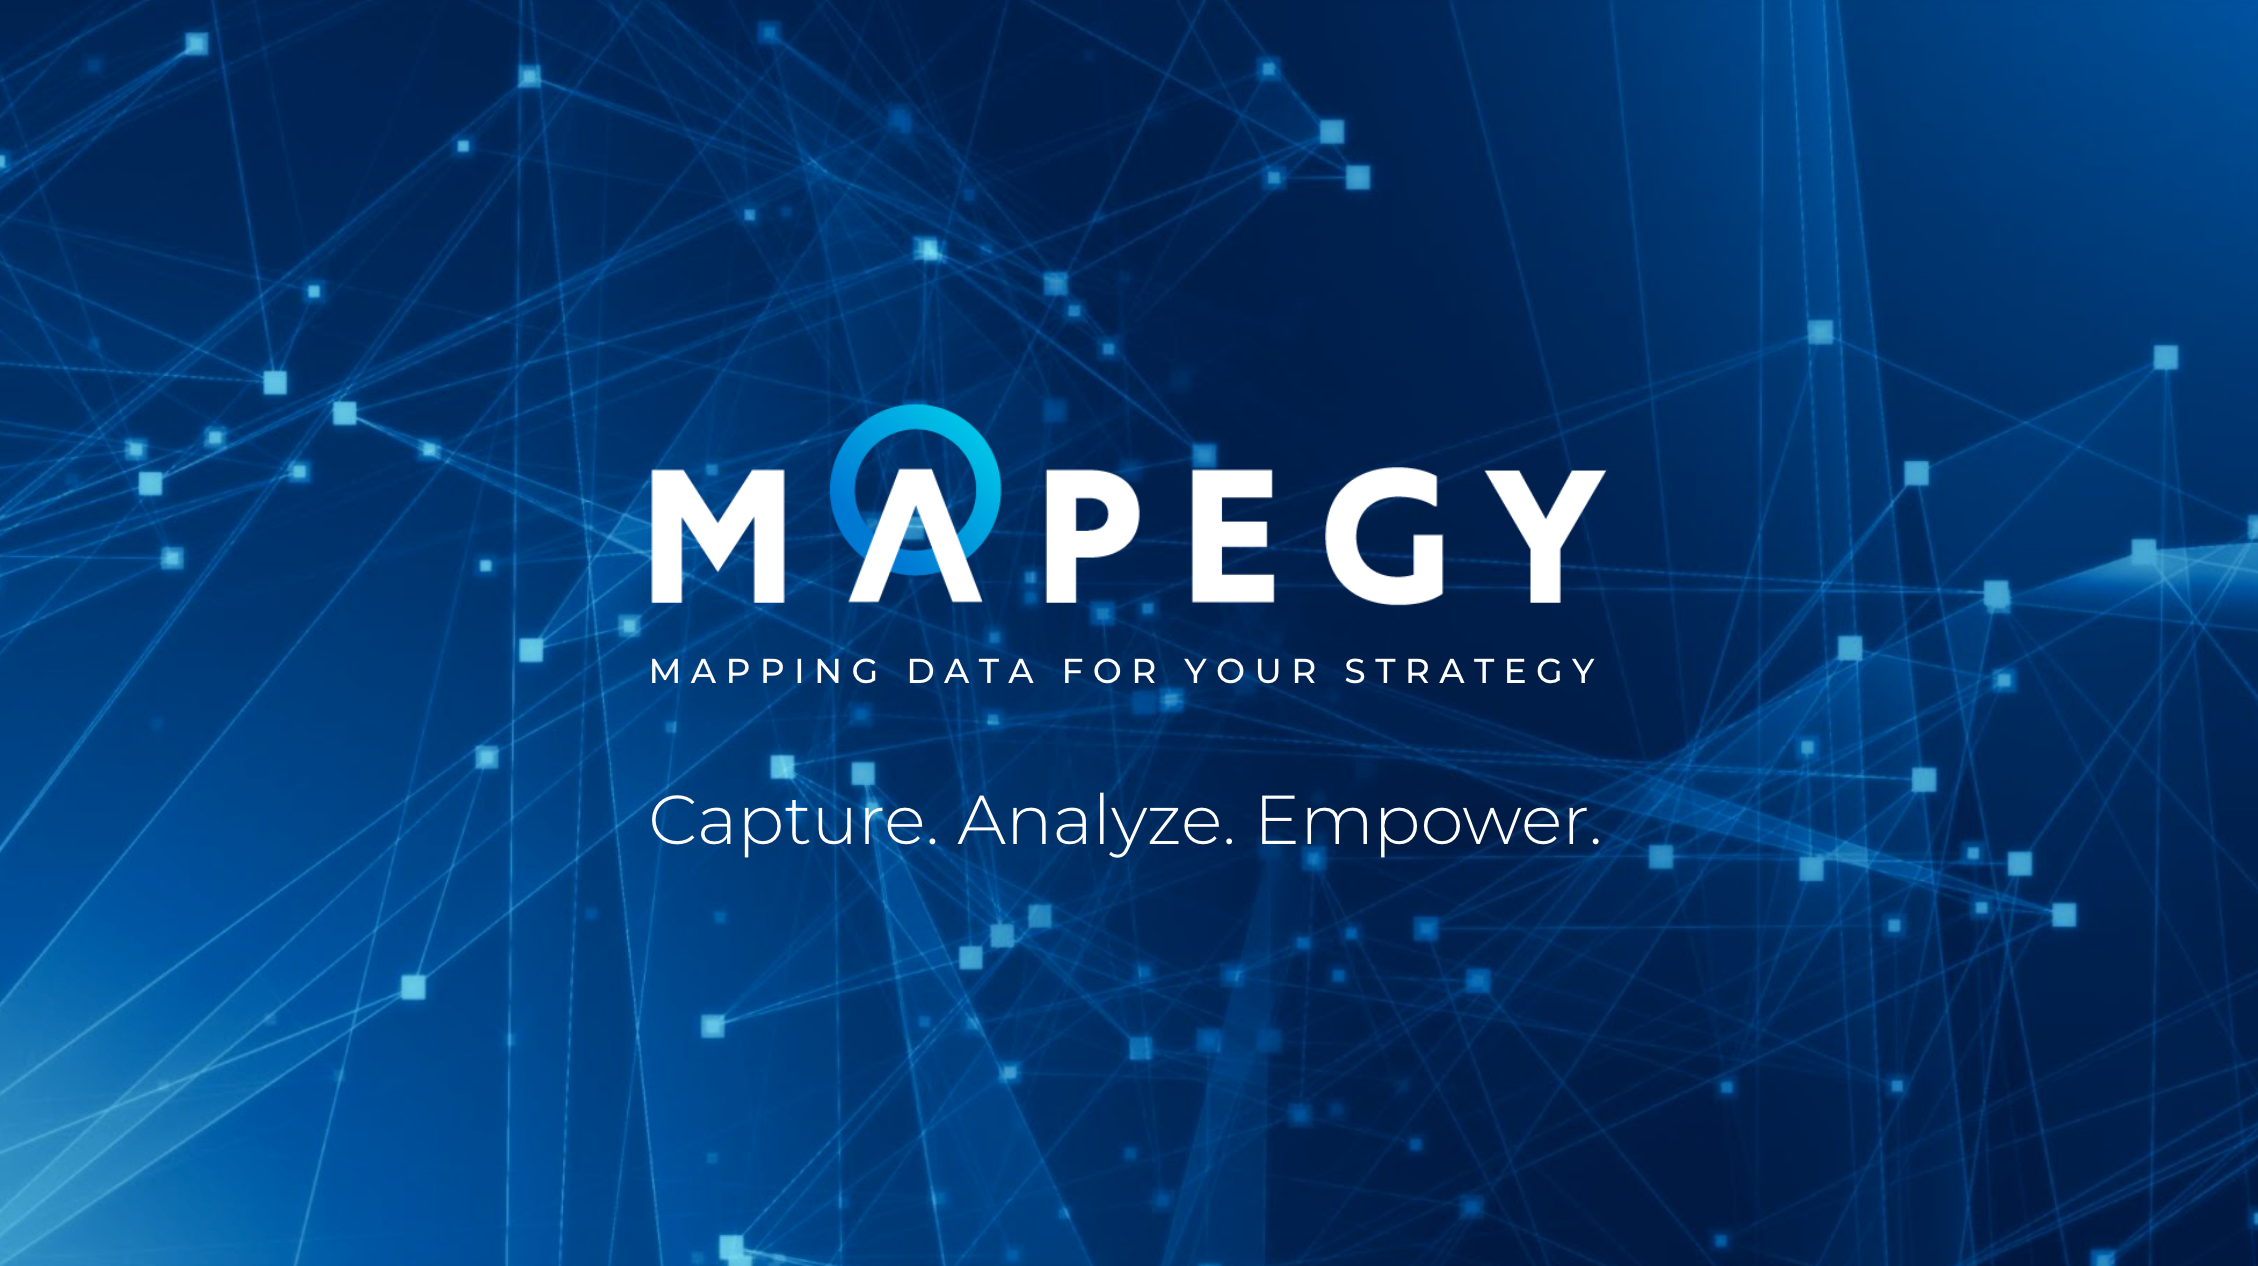 MAPEGY: Capture, Analyze. Empower